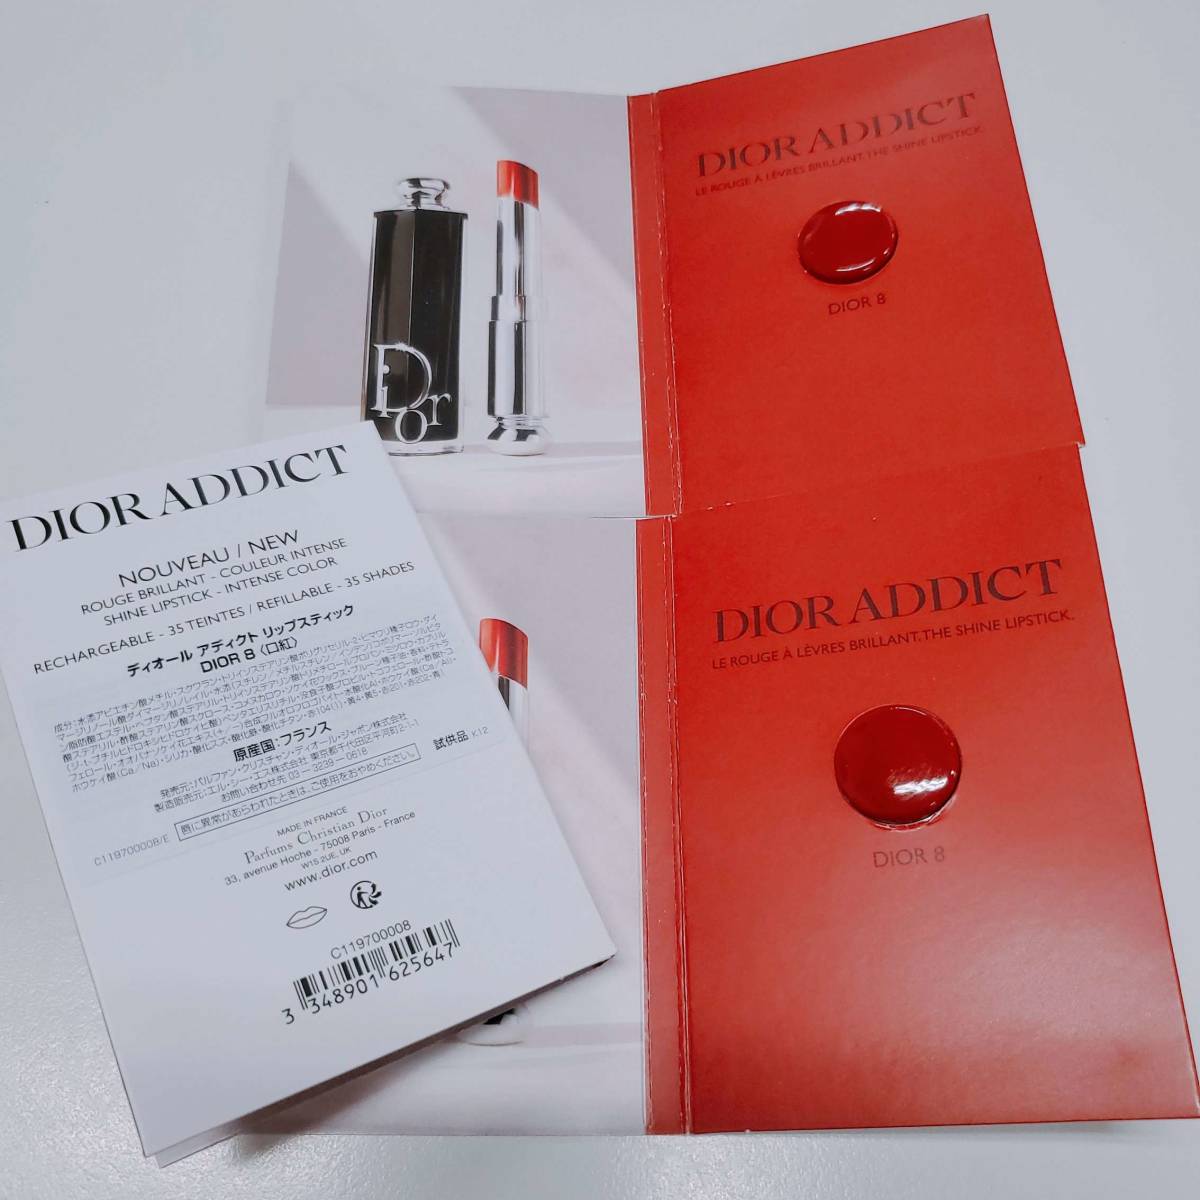 Christian Dior ディオール アディクト リップスティック DIOR 8 3個 526 マロー ローズ 2個 合計5個 限定 送料込み 試供品 口紅【SP361】